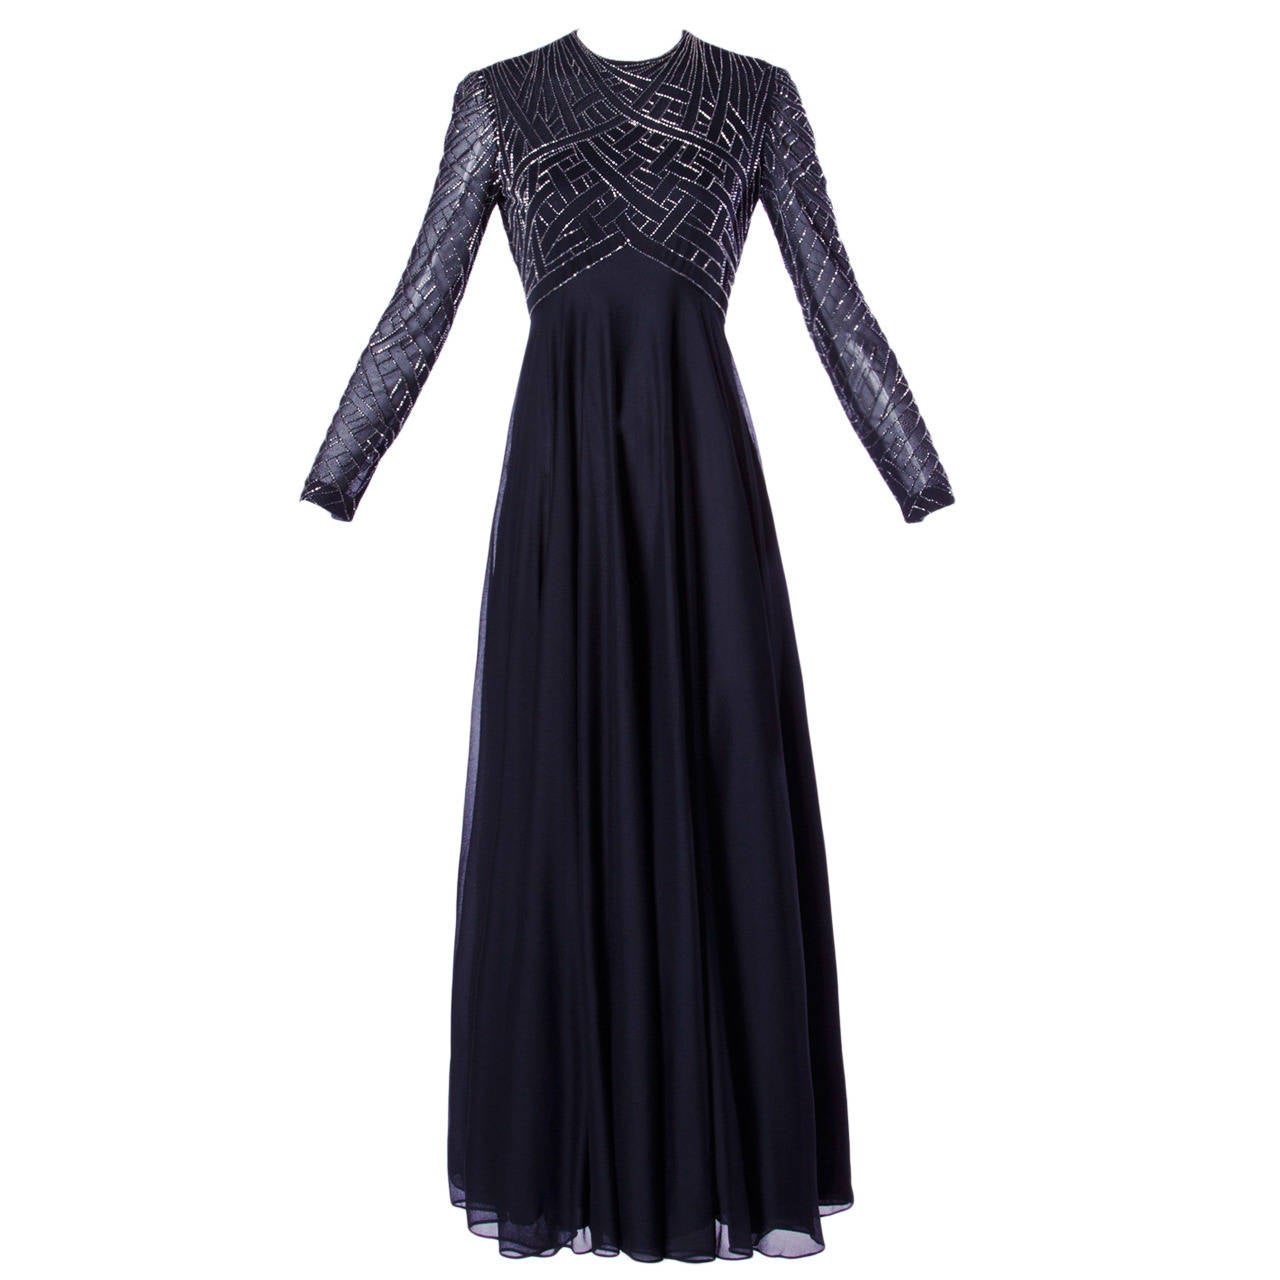 Victoria Royal Ltd. for I. Magnin Vintage 70s Metallic Beaded Black Silk Gown